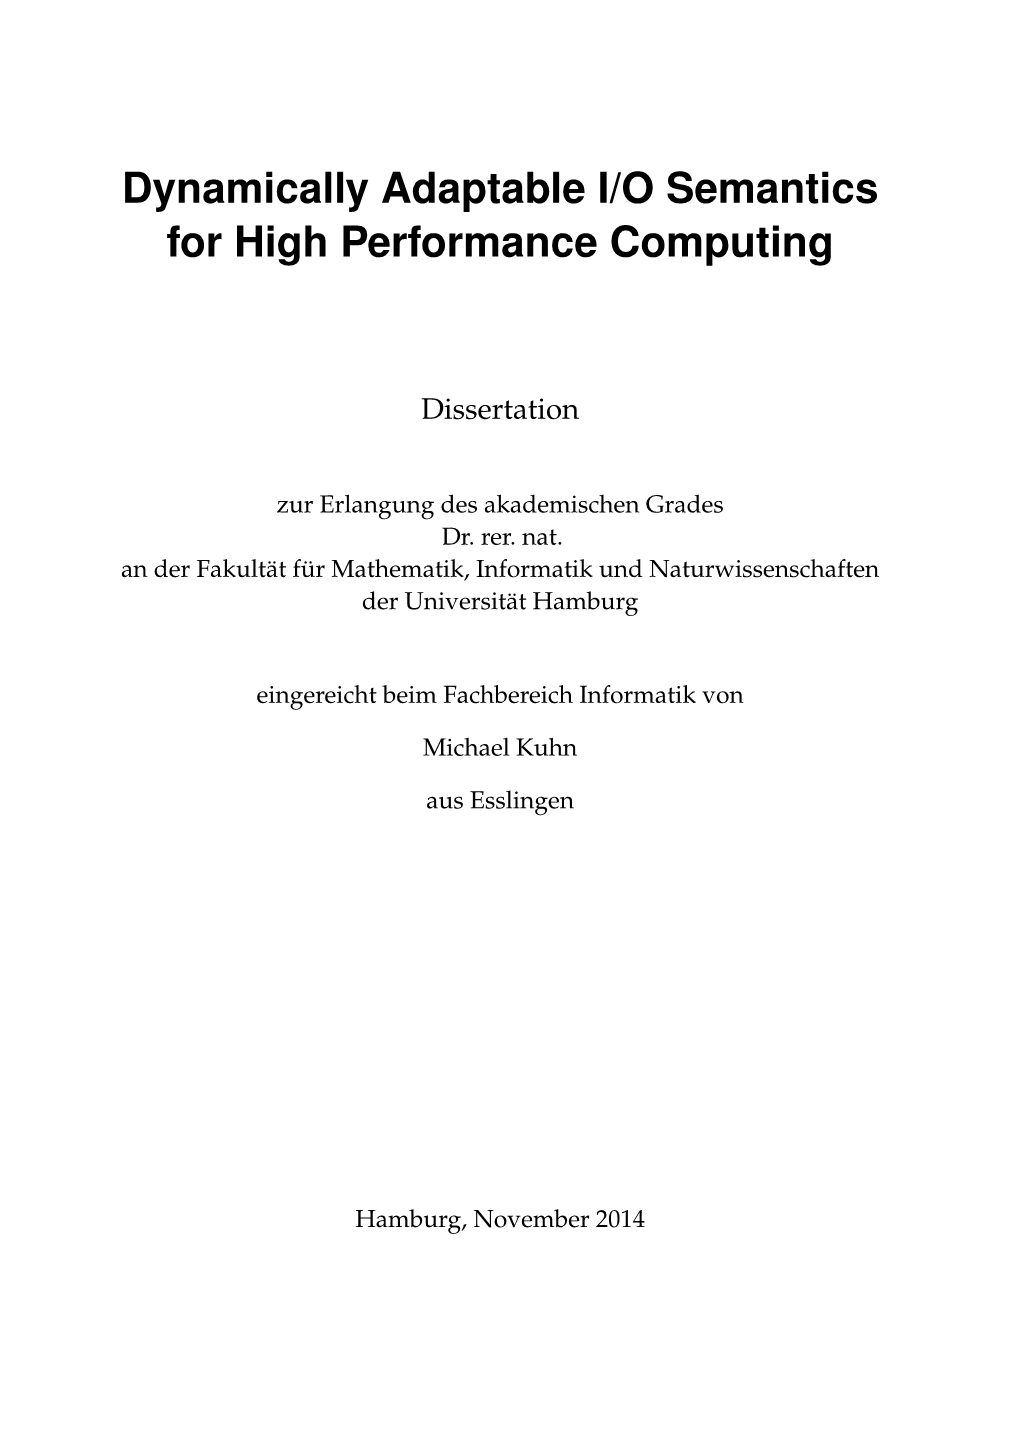 Dynamically Adaptable I/O Semantics for High Performance Computing